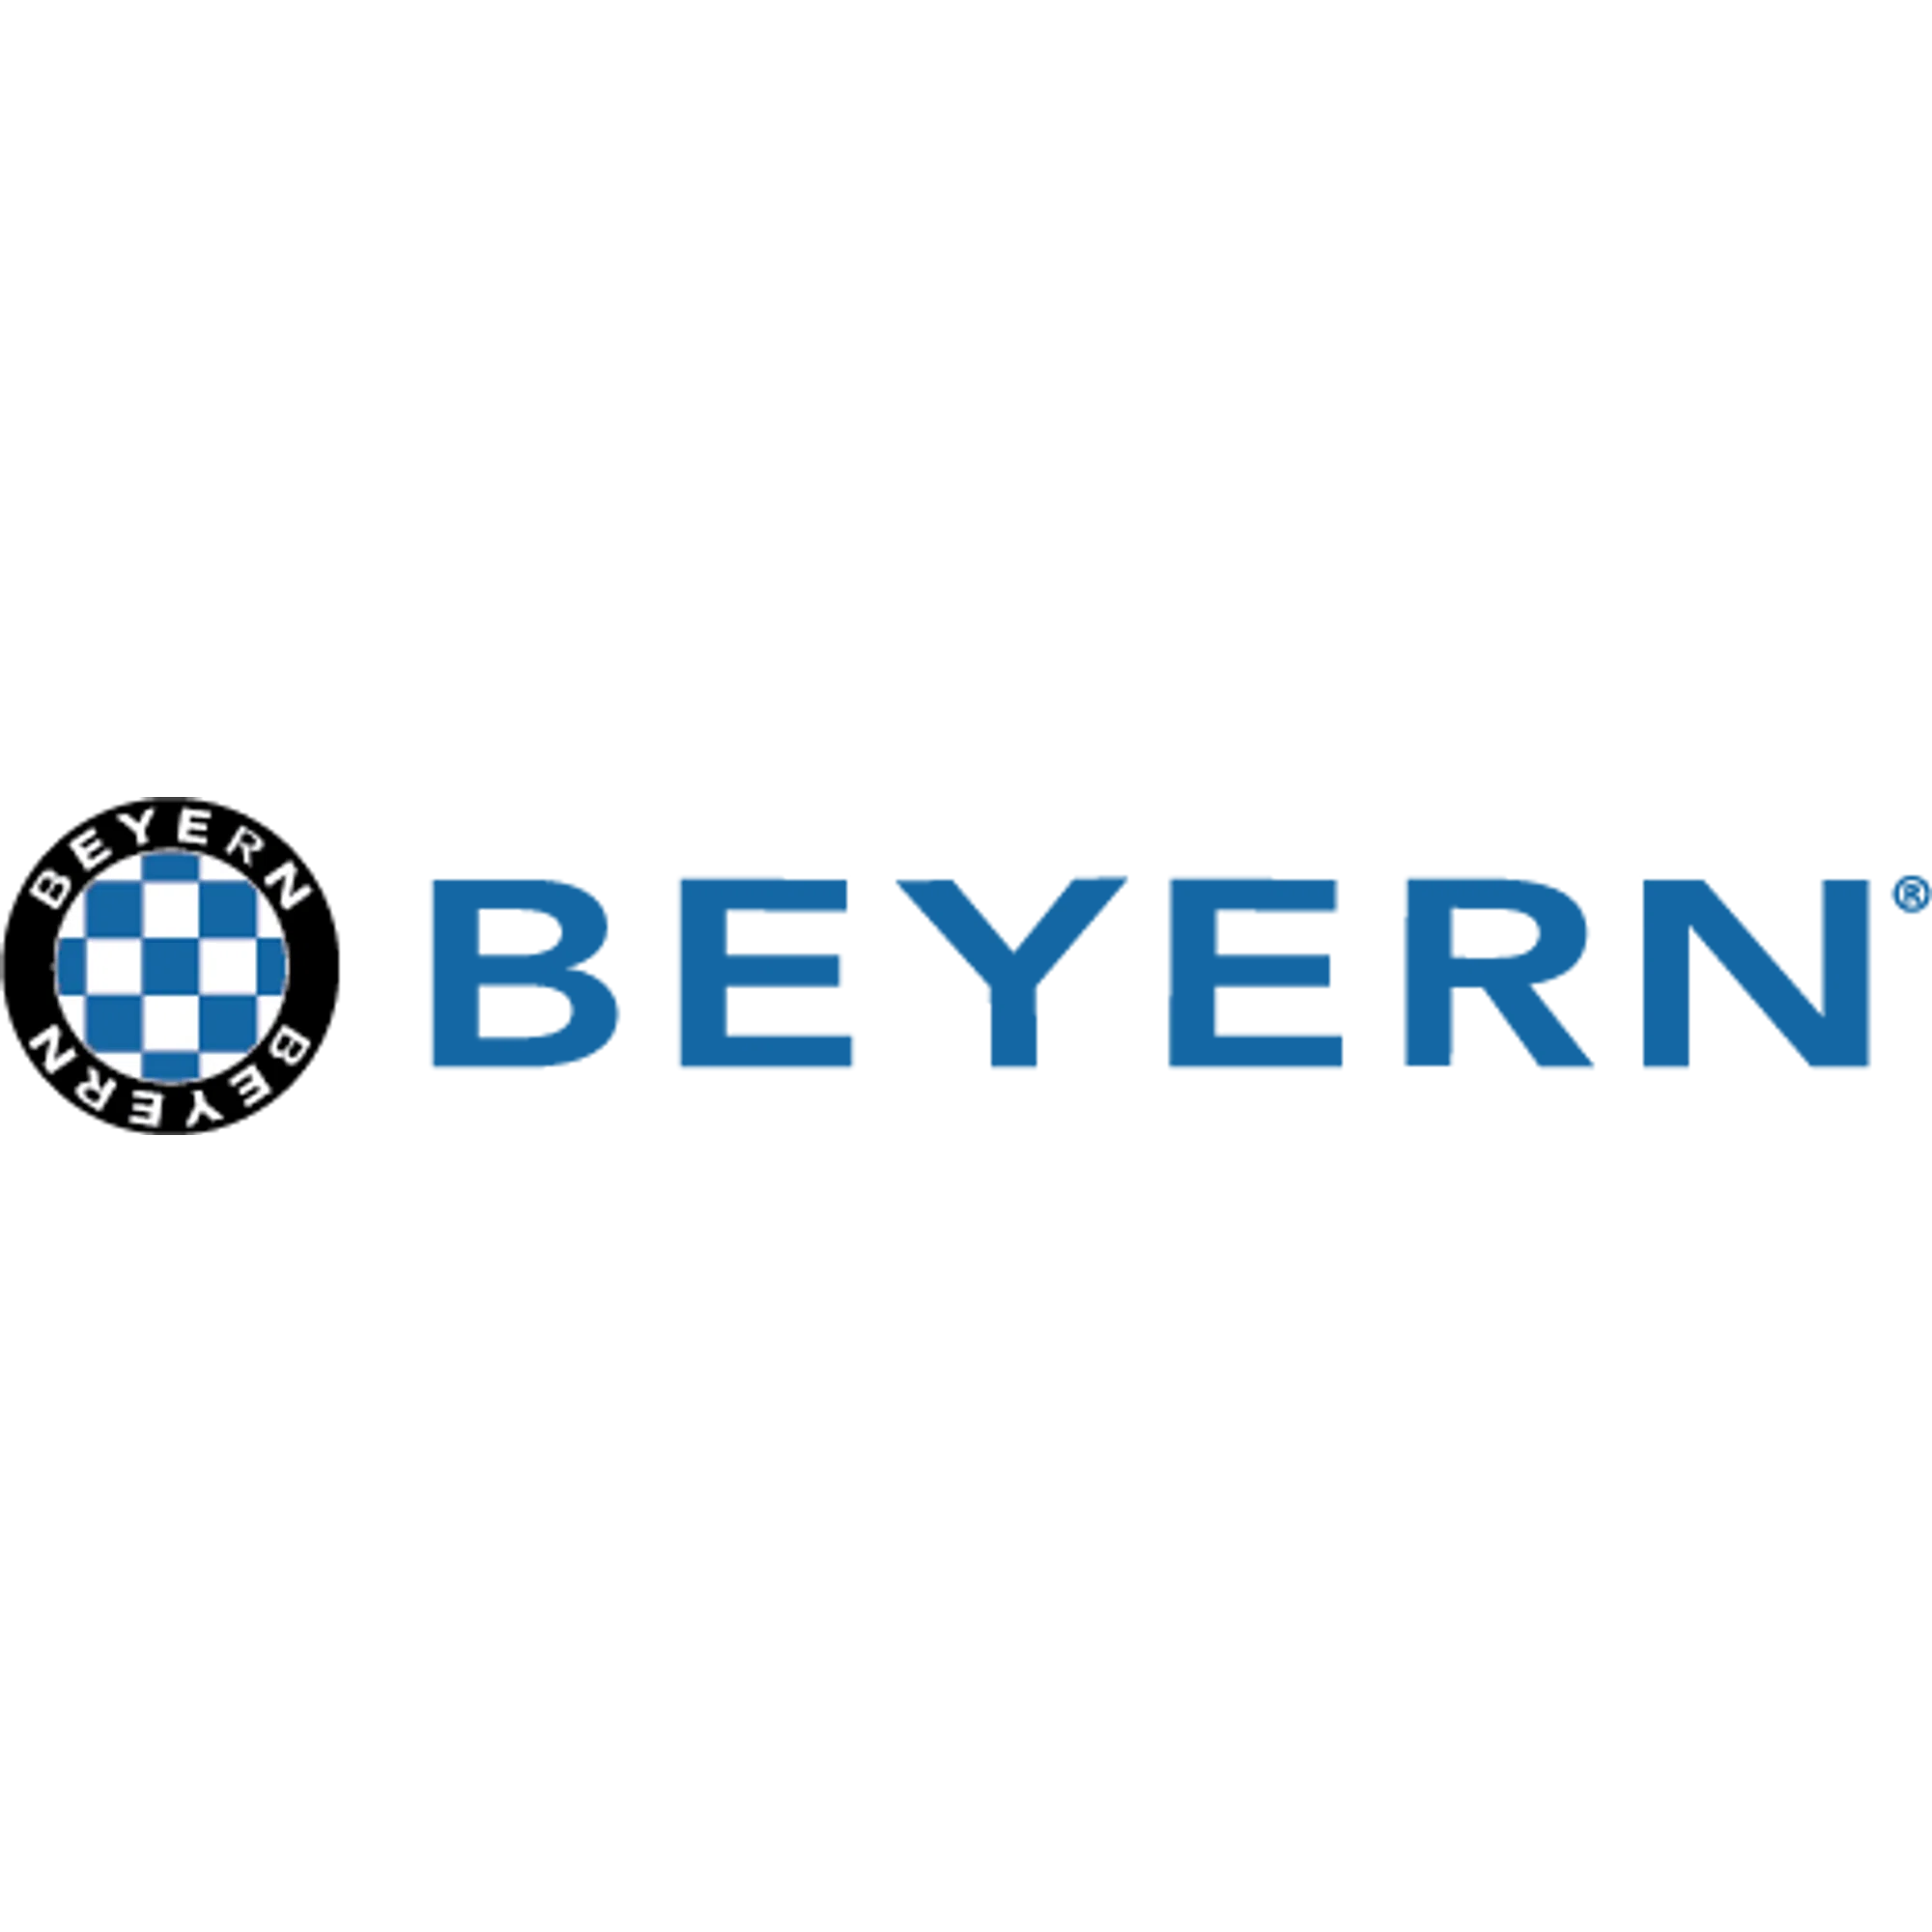 beyernwheels.com logo